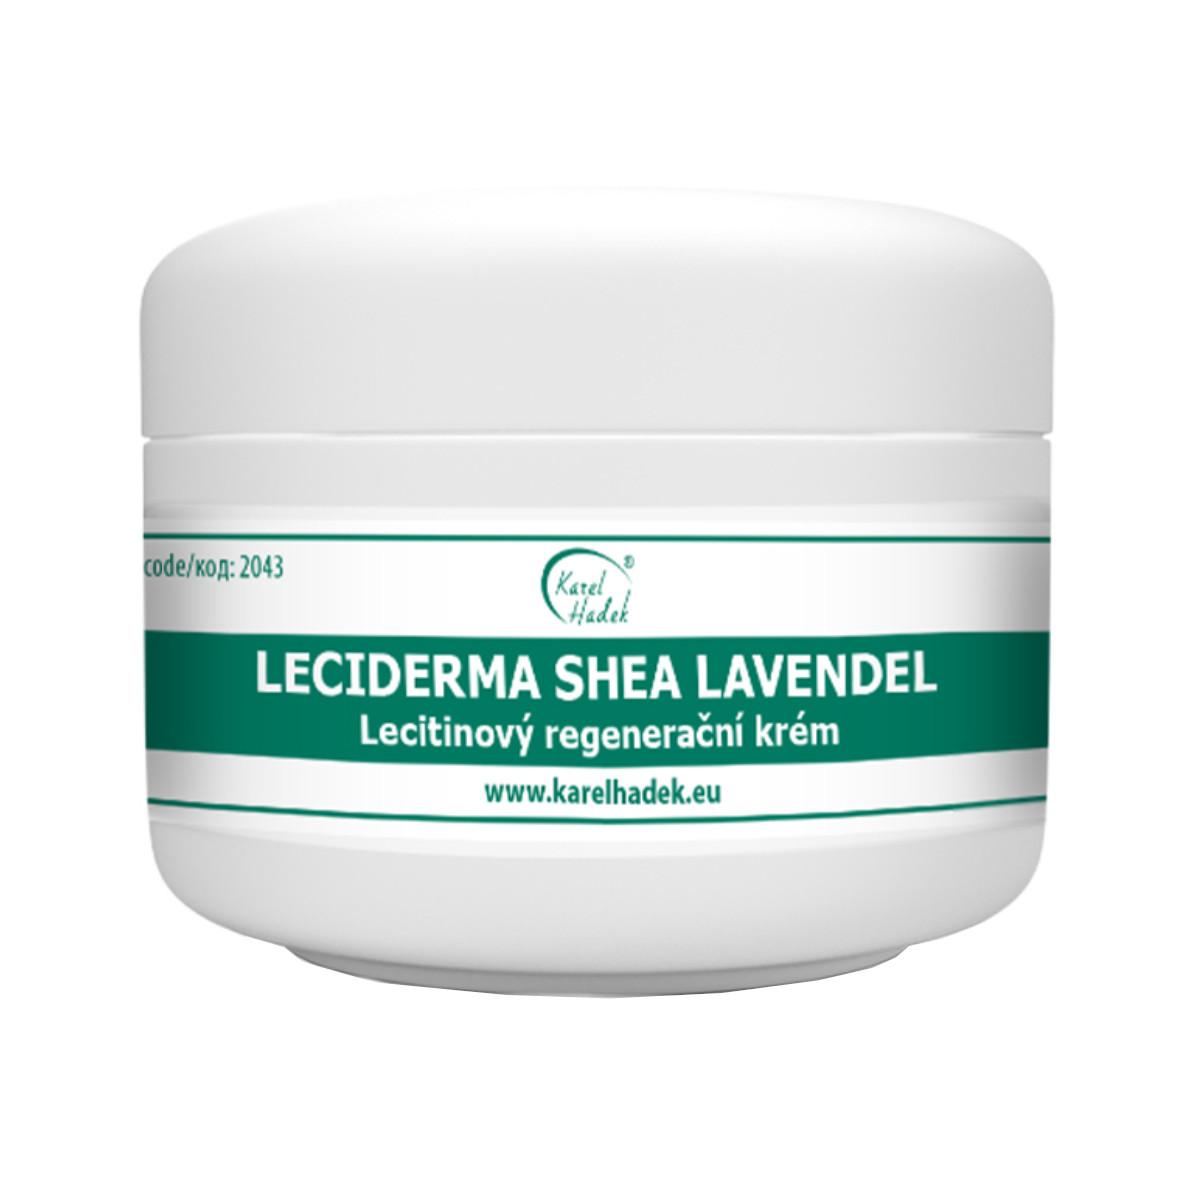 Aromaterapie Karel Hadek LECIDERMA SHEA LAVENDEL Lecitinový regenerační krém 100 ml